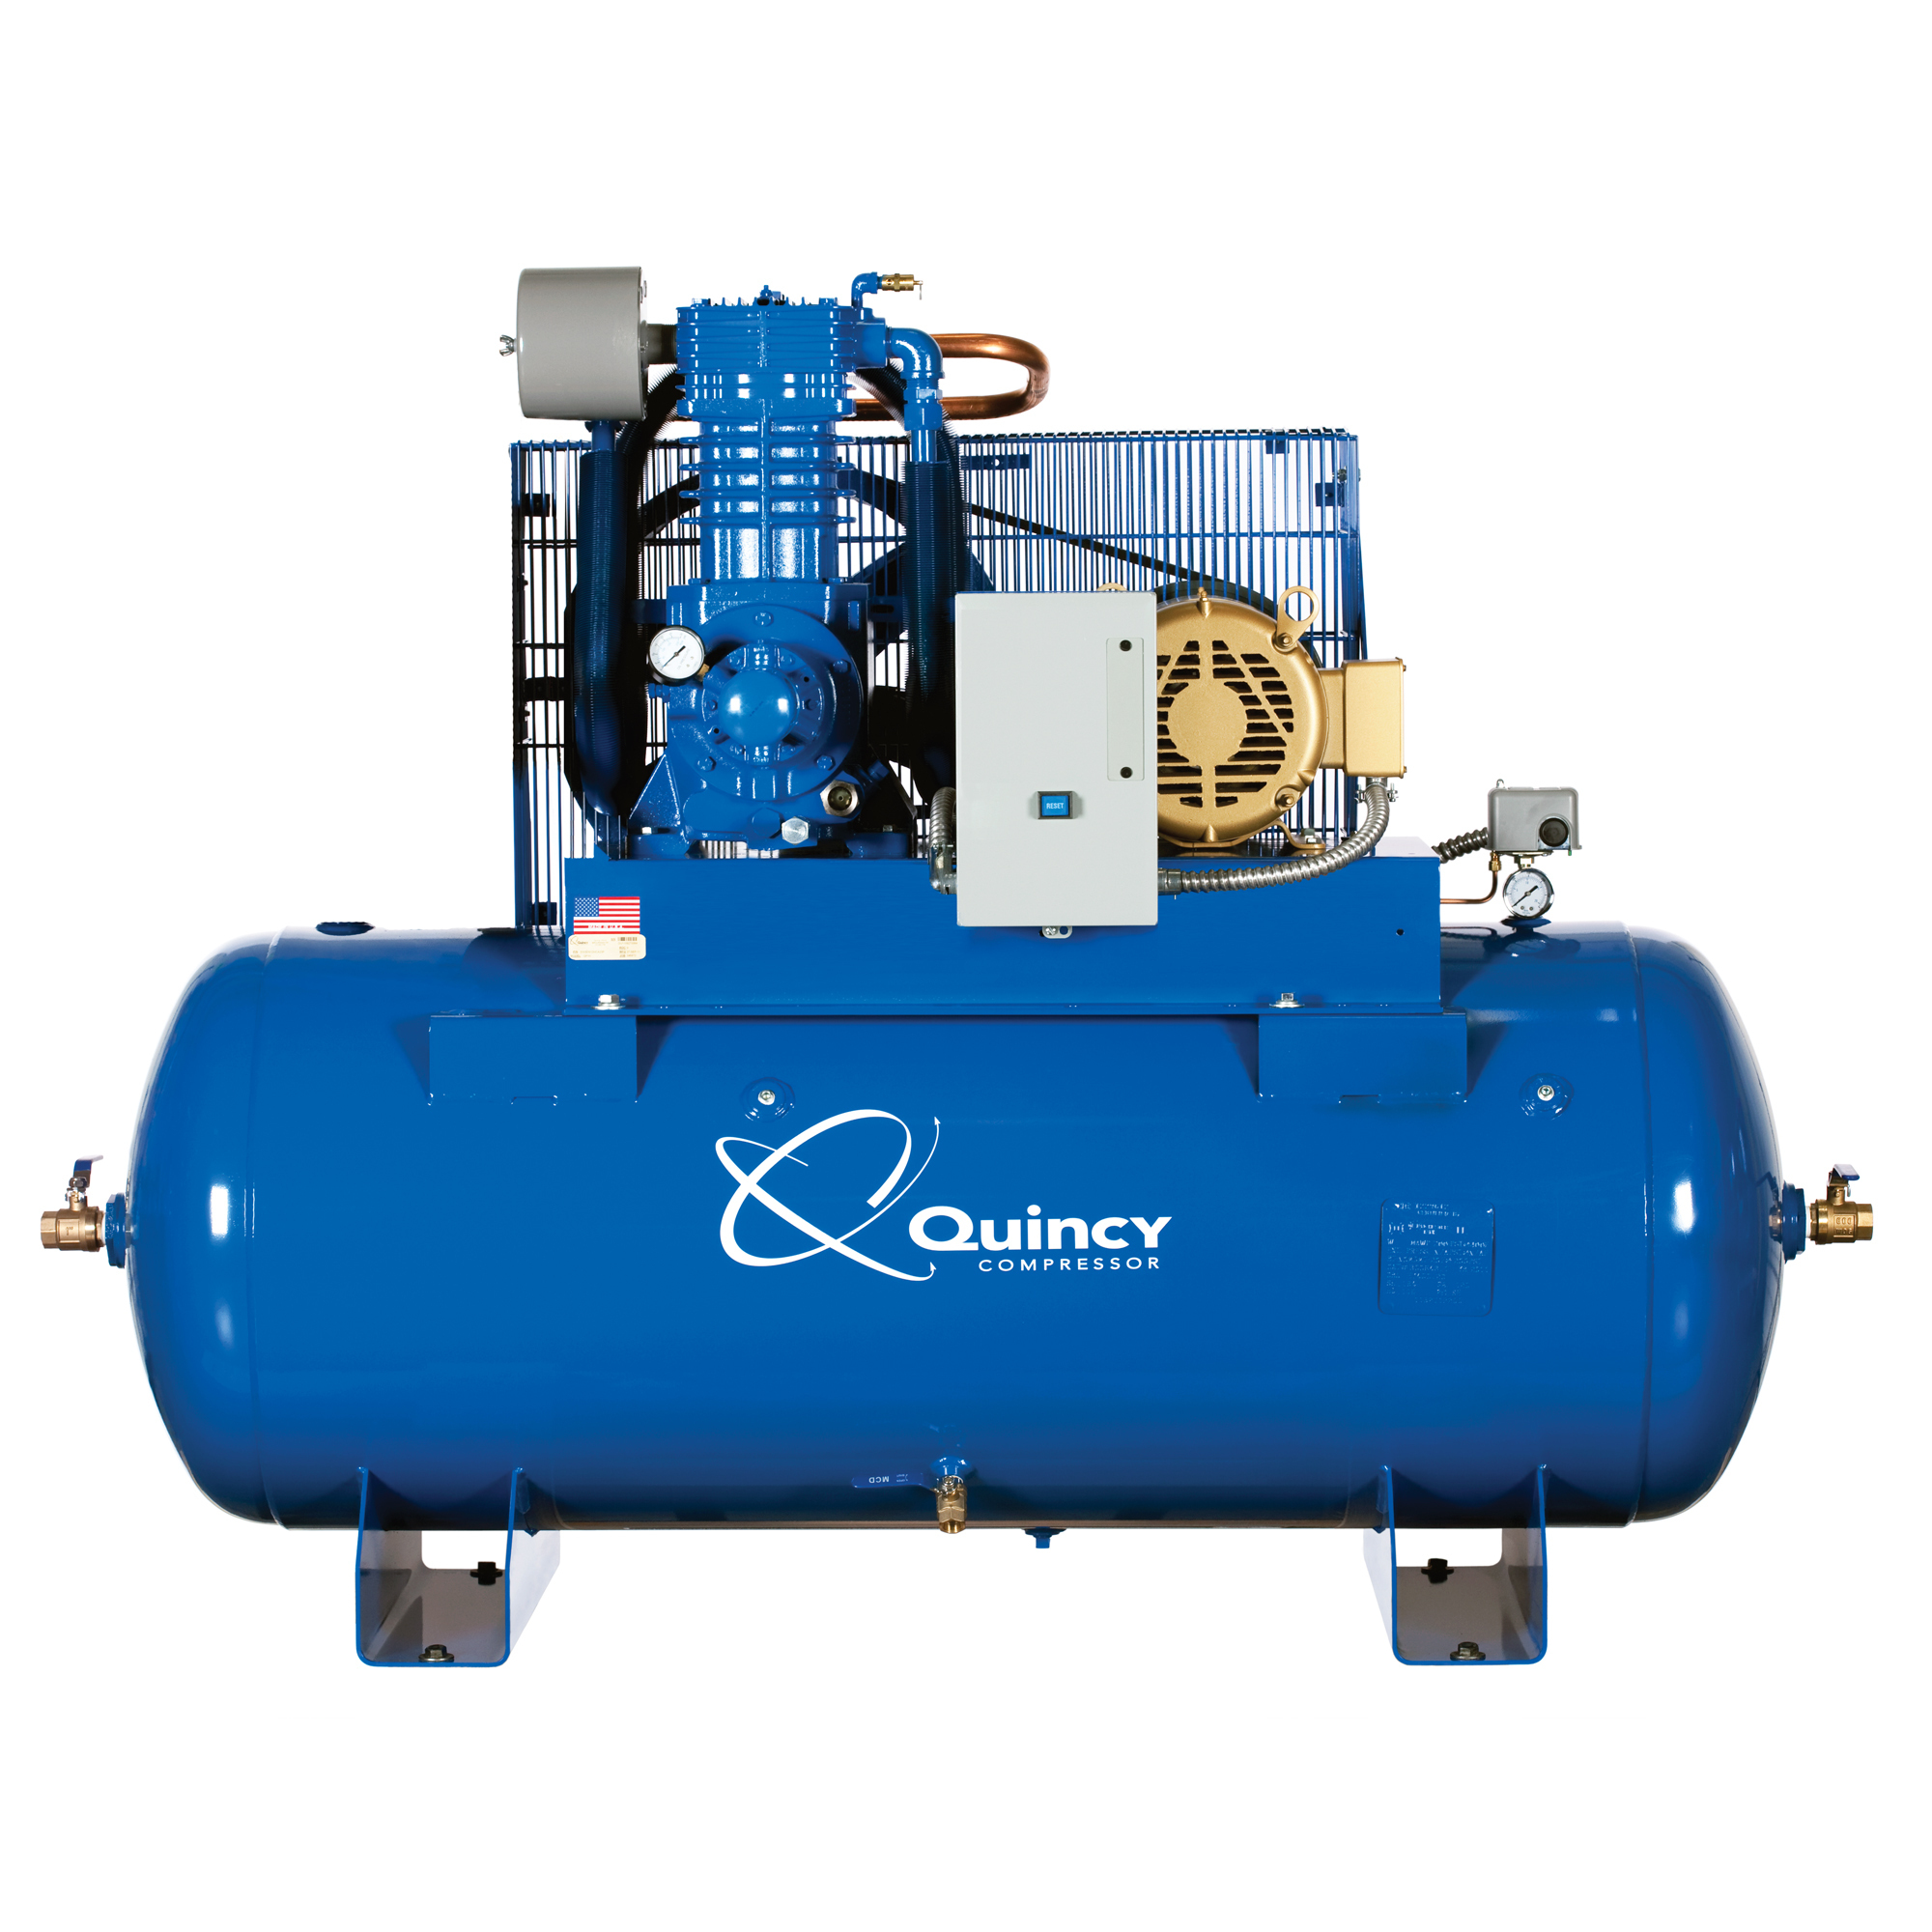 Quincy Compressor, QP1 5H 80G 2S Air Compressor 460V 3ph H MAX, Horsepower 5 HP, Air Tank Size 80 Gal, Volts 460 Model 553DS80HCA46M